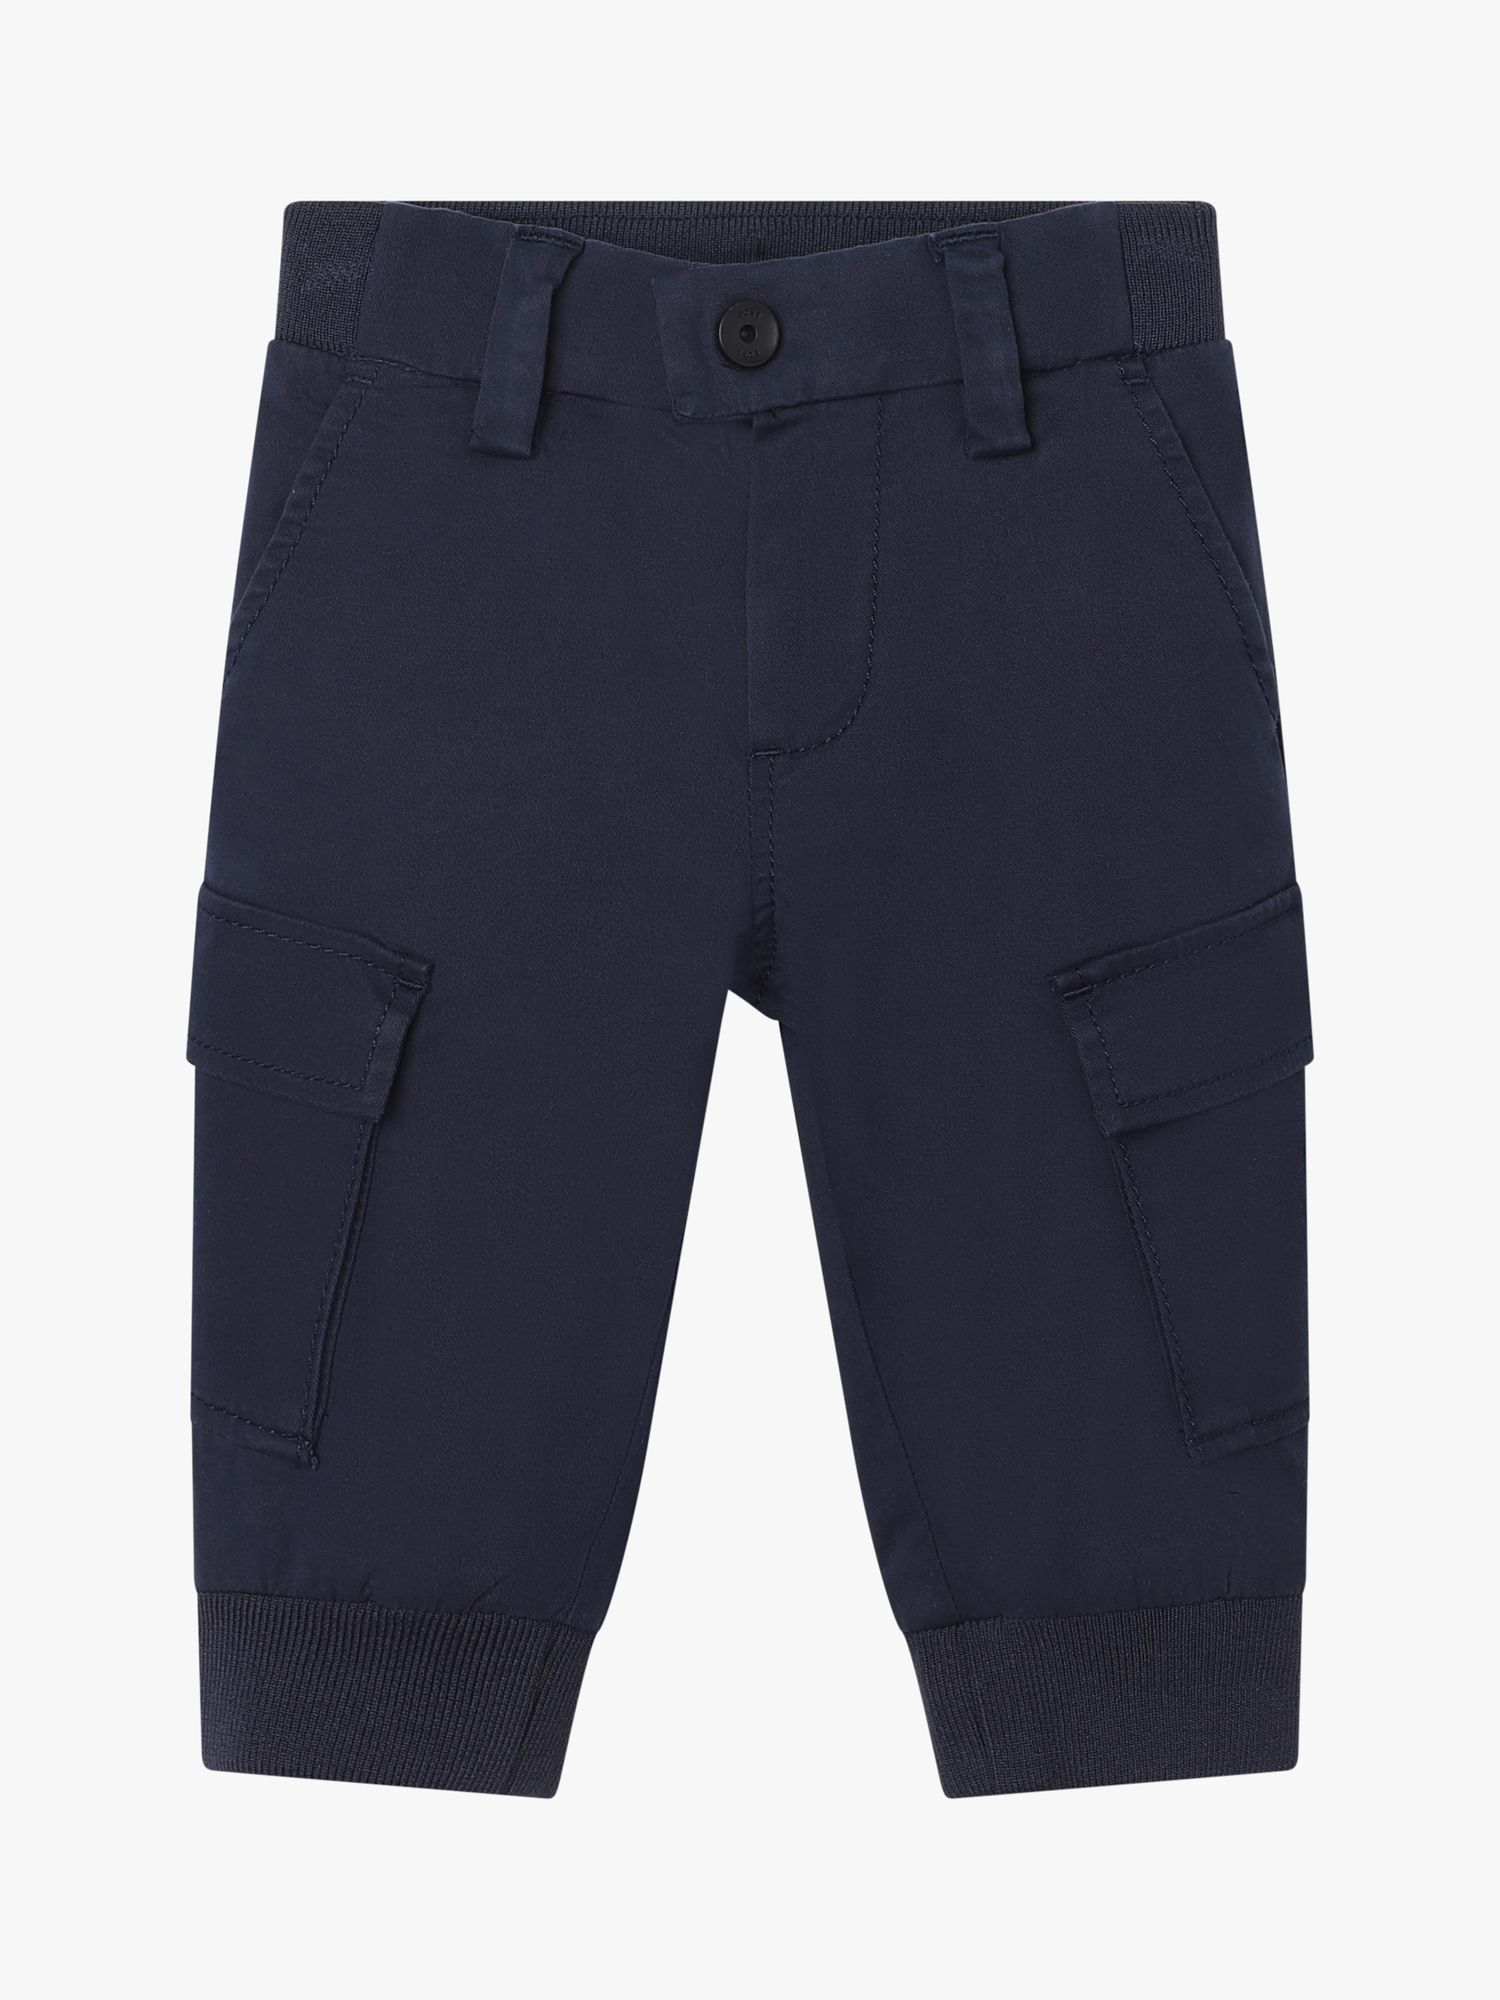 Детские брюки HUGO BOSS, темно-синие кроссовки на шнуровке hugo boss saturn 401 темно синие